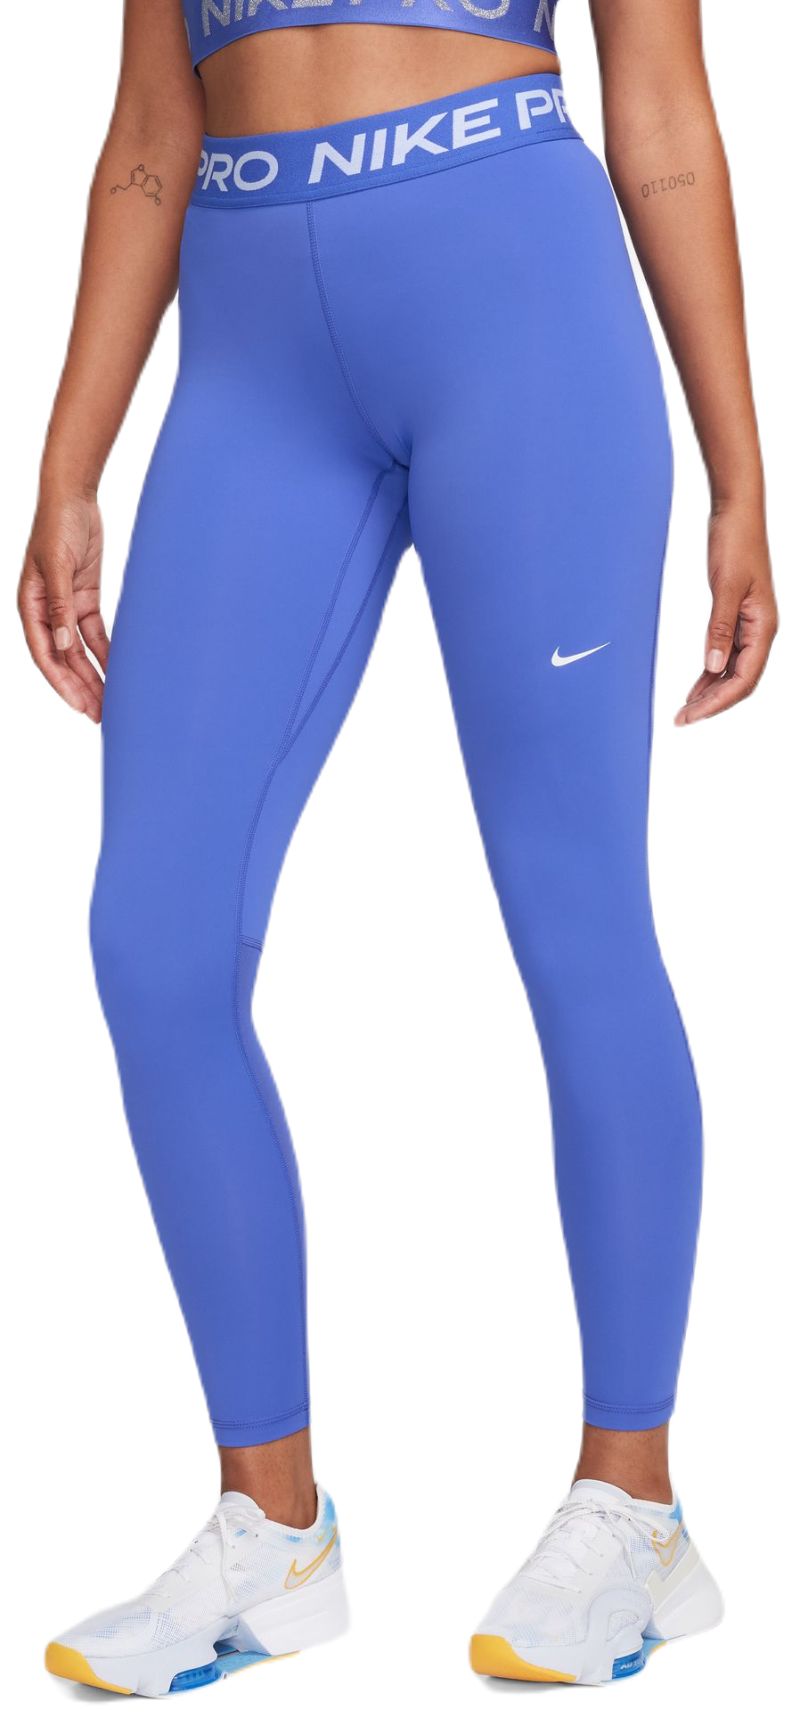 Women's leggings Nike Pro 365 Mid-Rise Tight grey CZ9779-084 